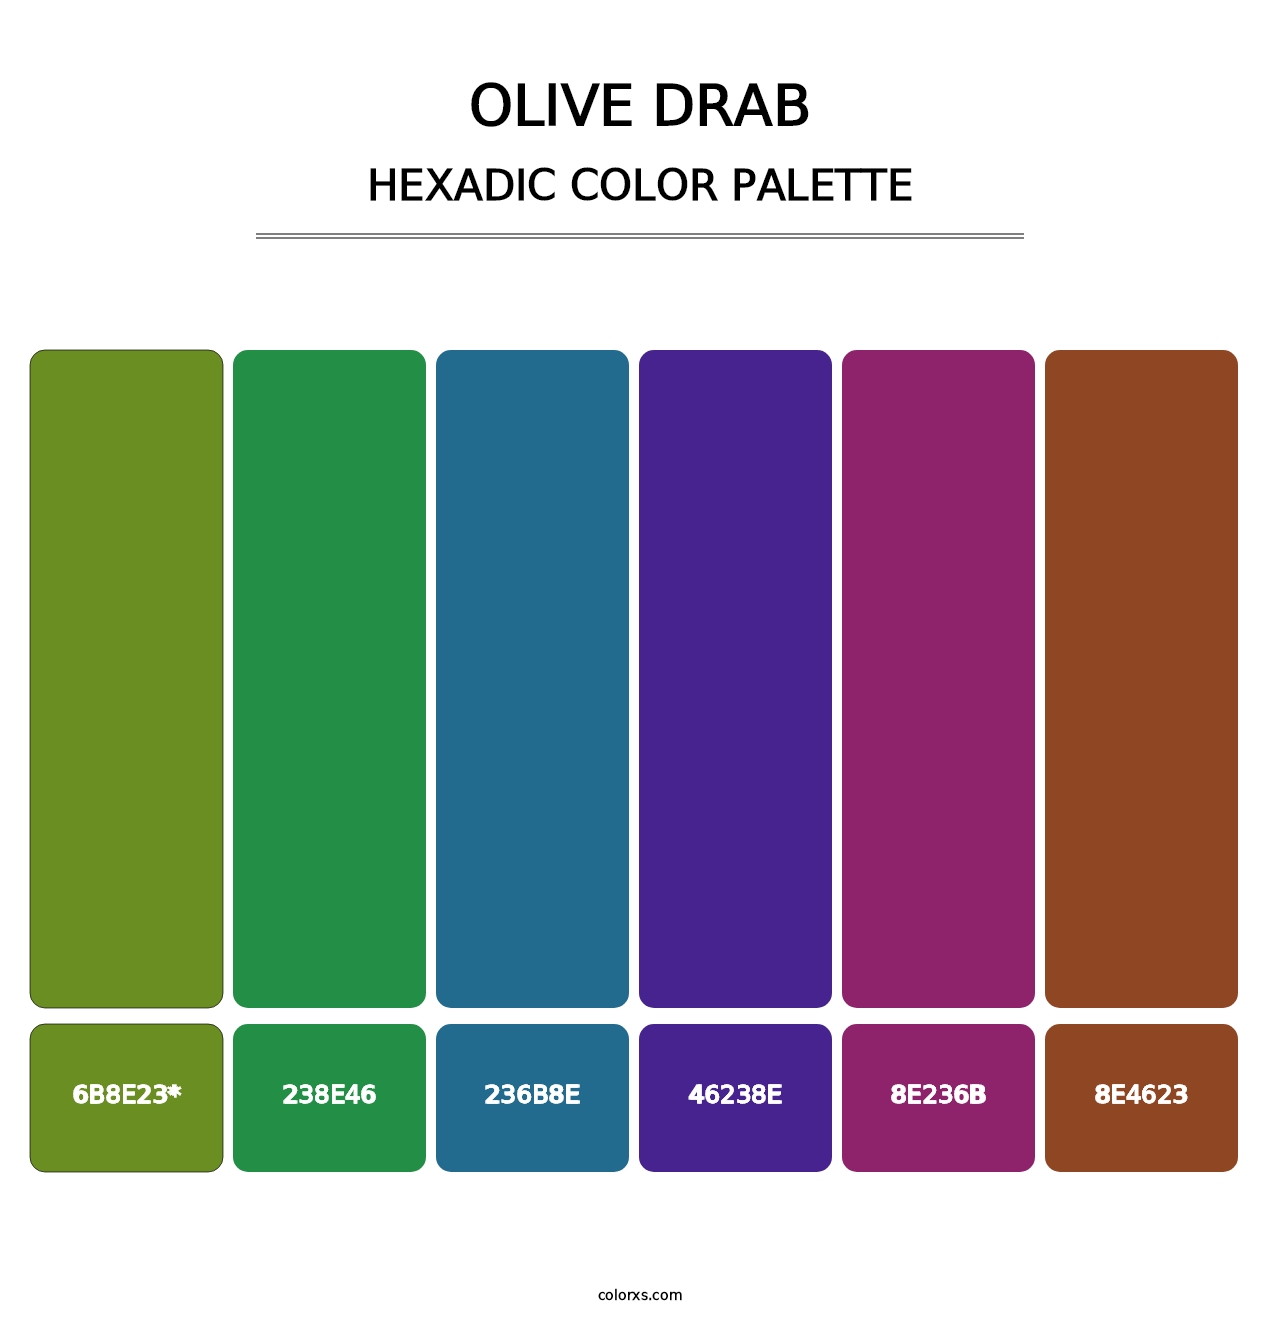 Olive Drab - Hexadic Color Palette